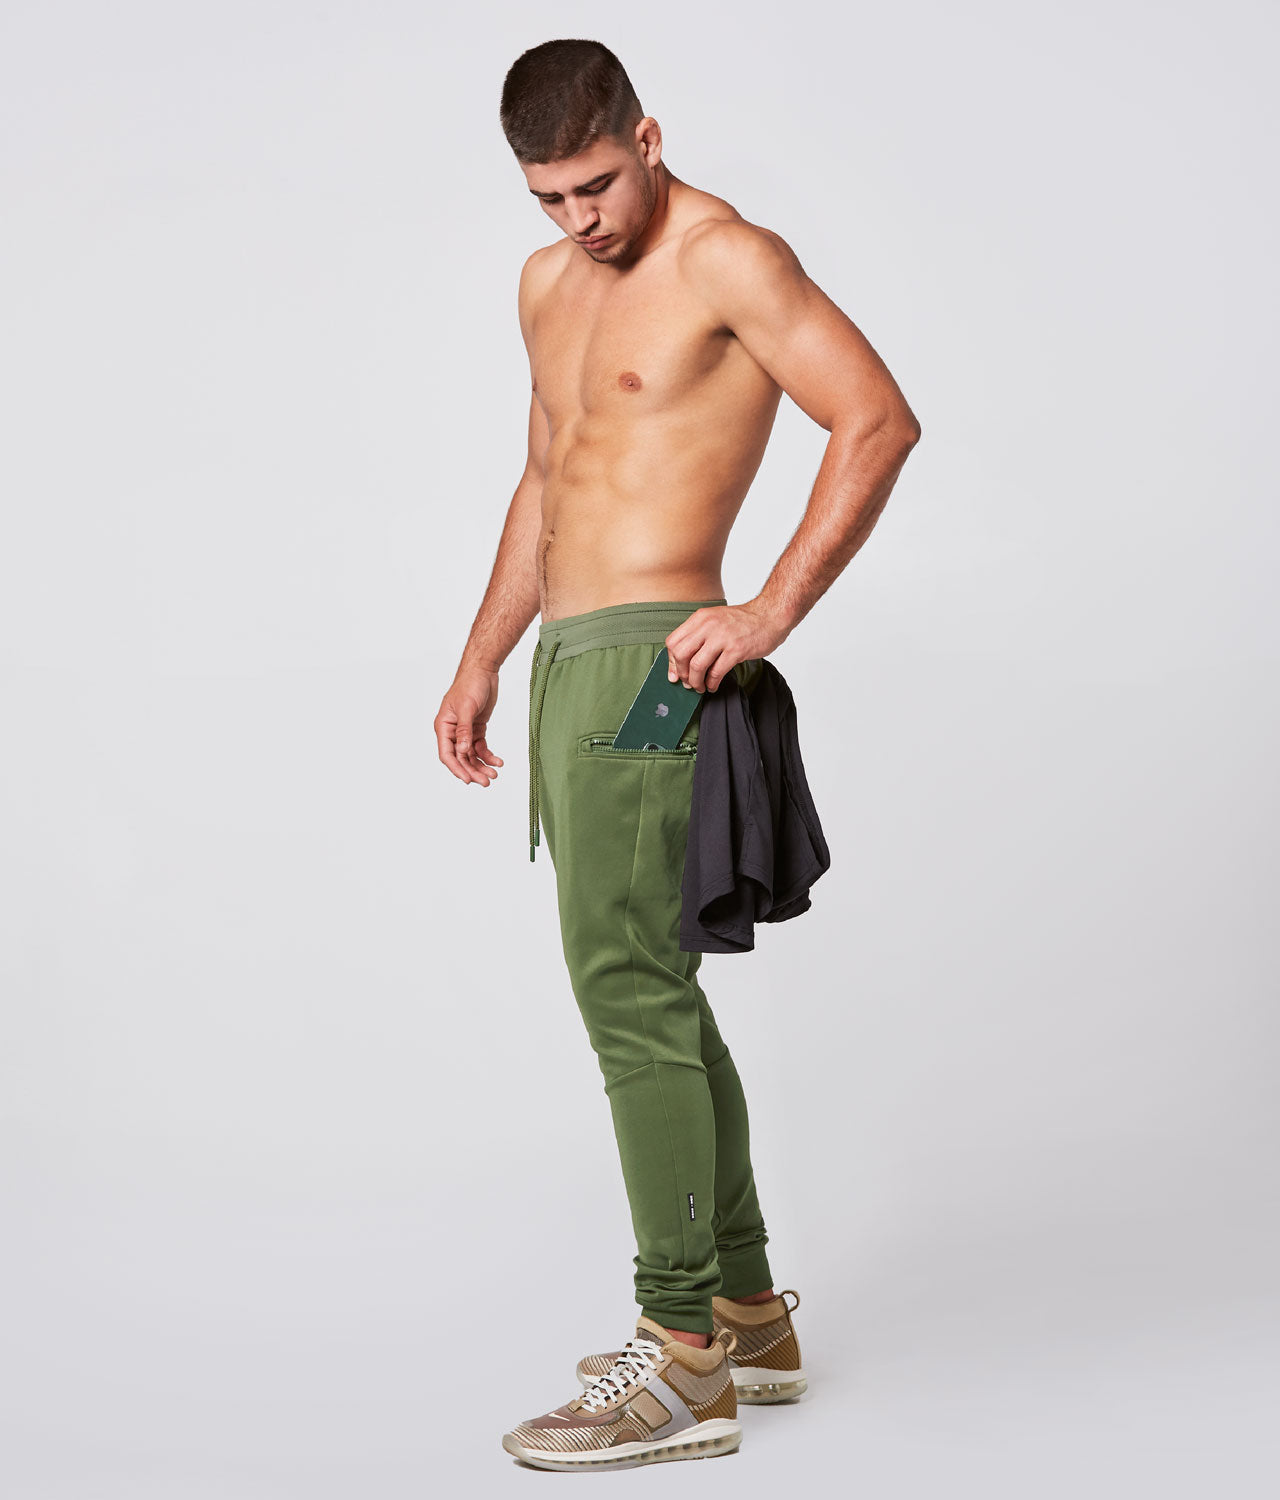 gvdentm Men Pants Mens Workout Pants Nylon Joggers Stretch Casual Travel  Pants Green,M 